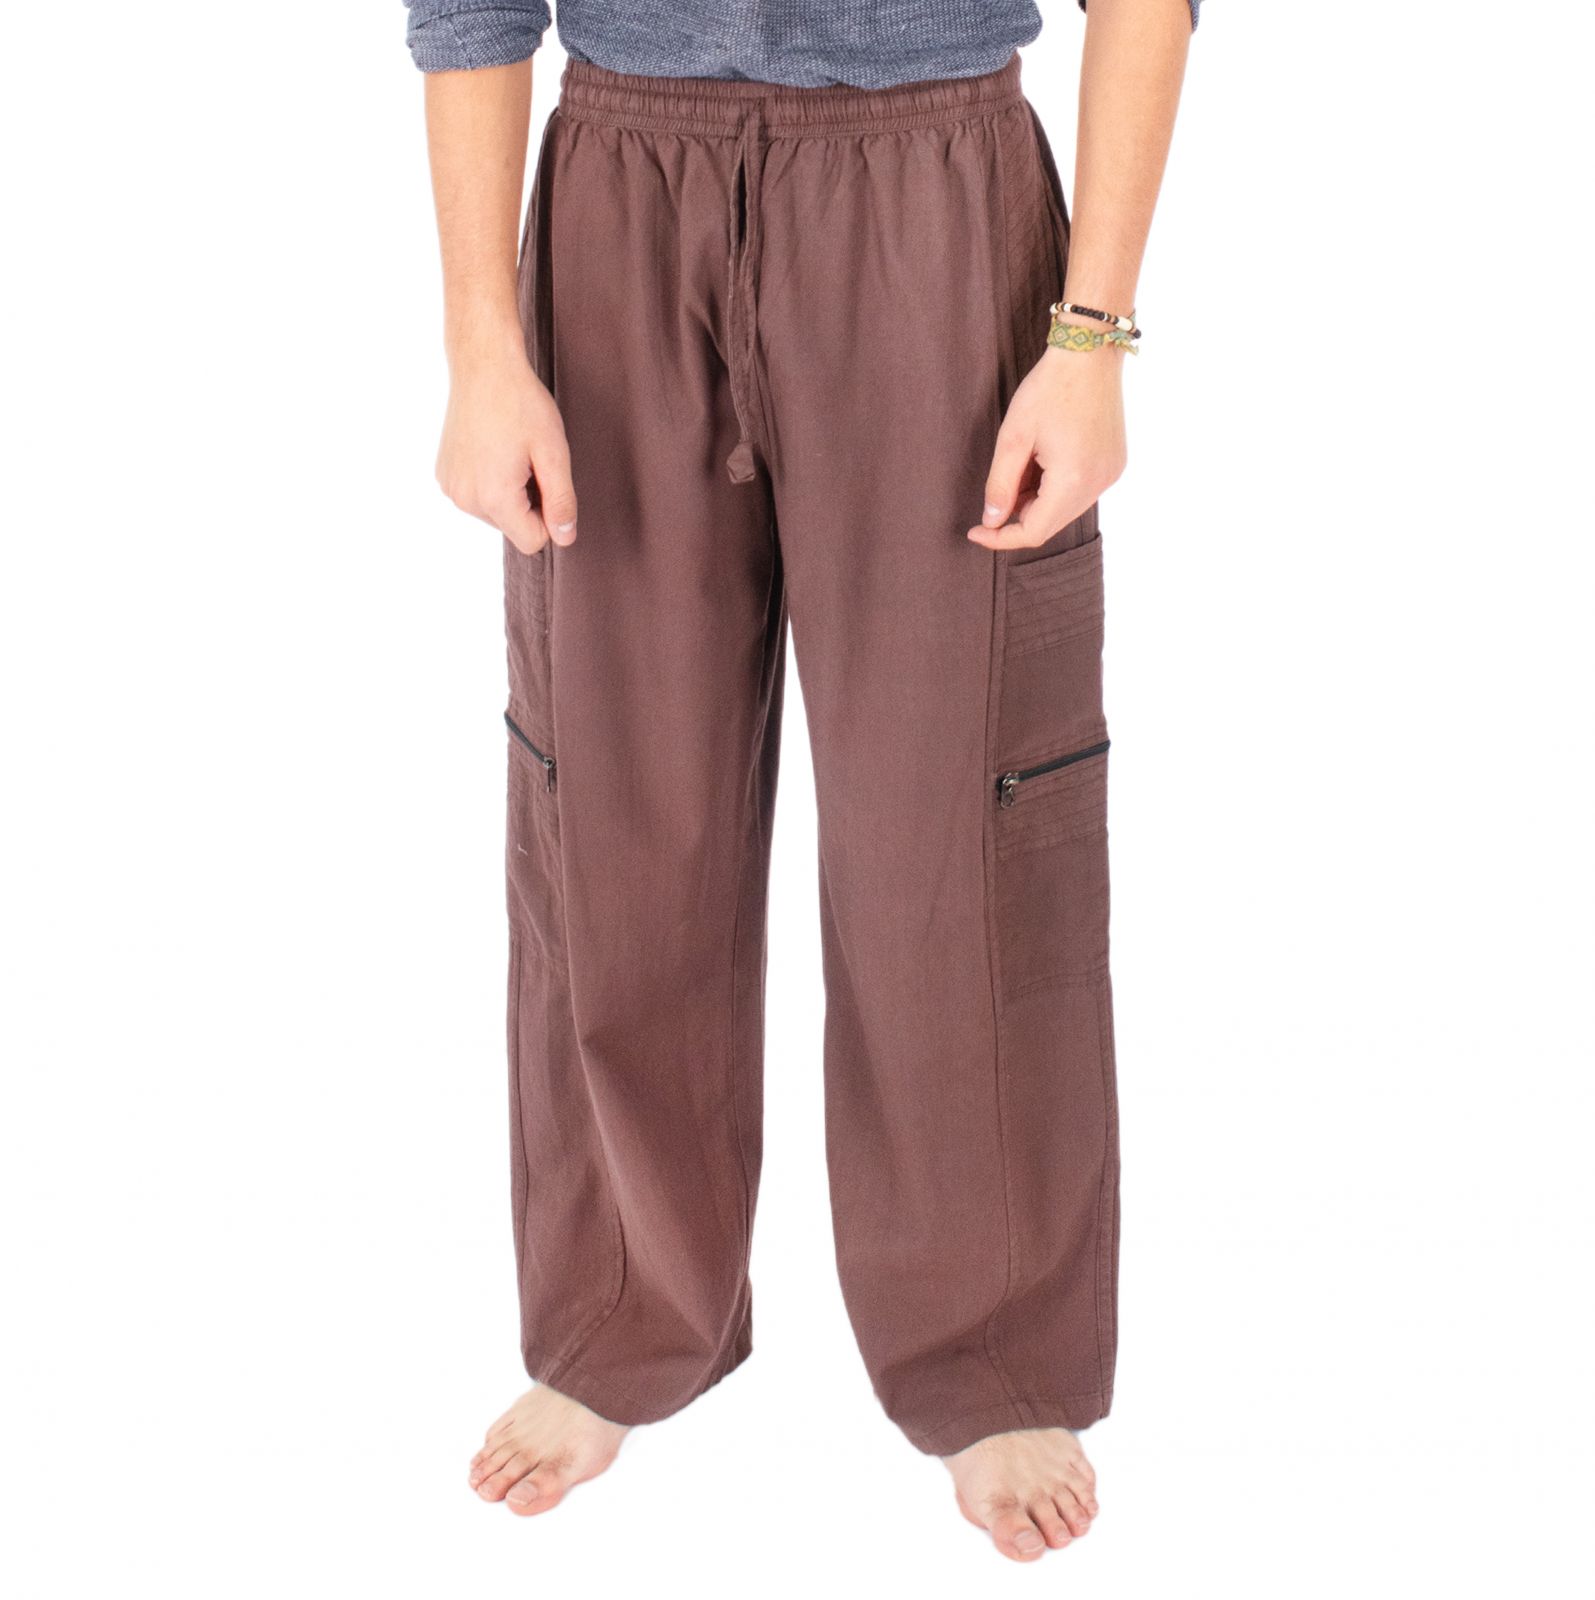 Pantaloni marroni da uomo in cotone Taral Brown Nepal